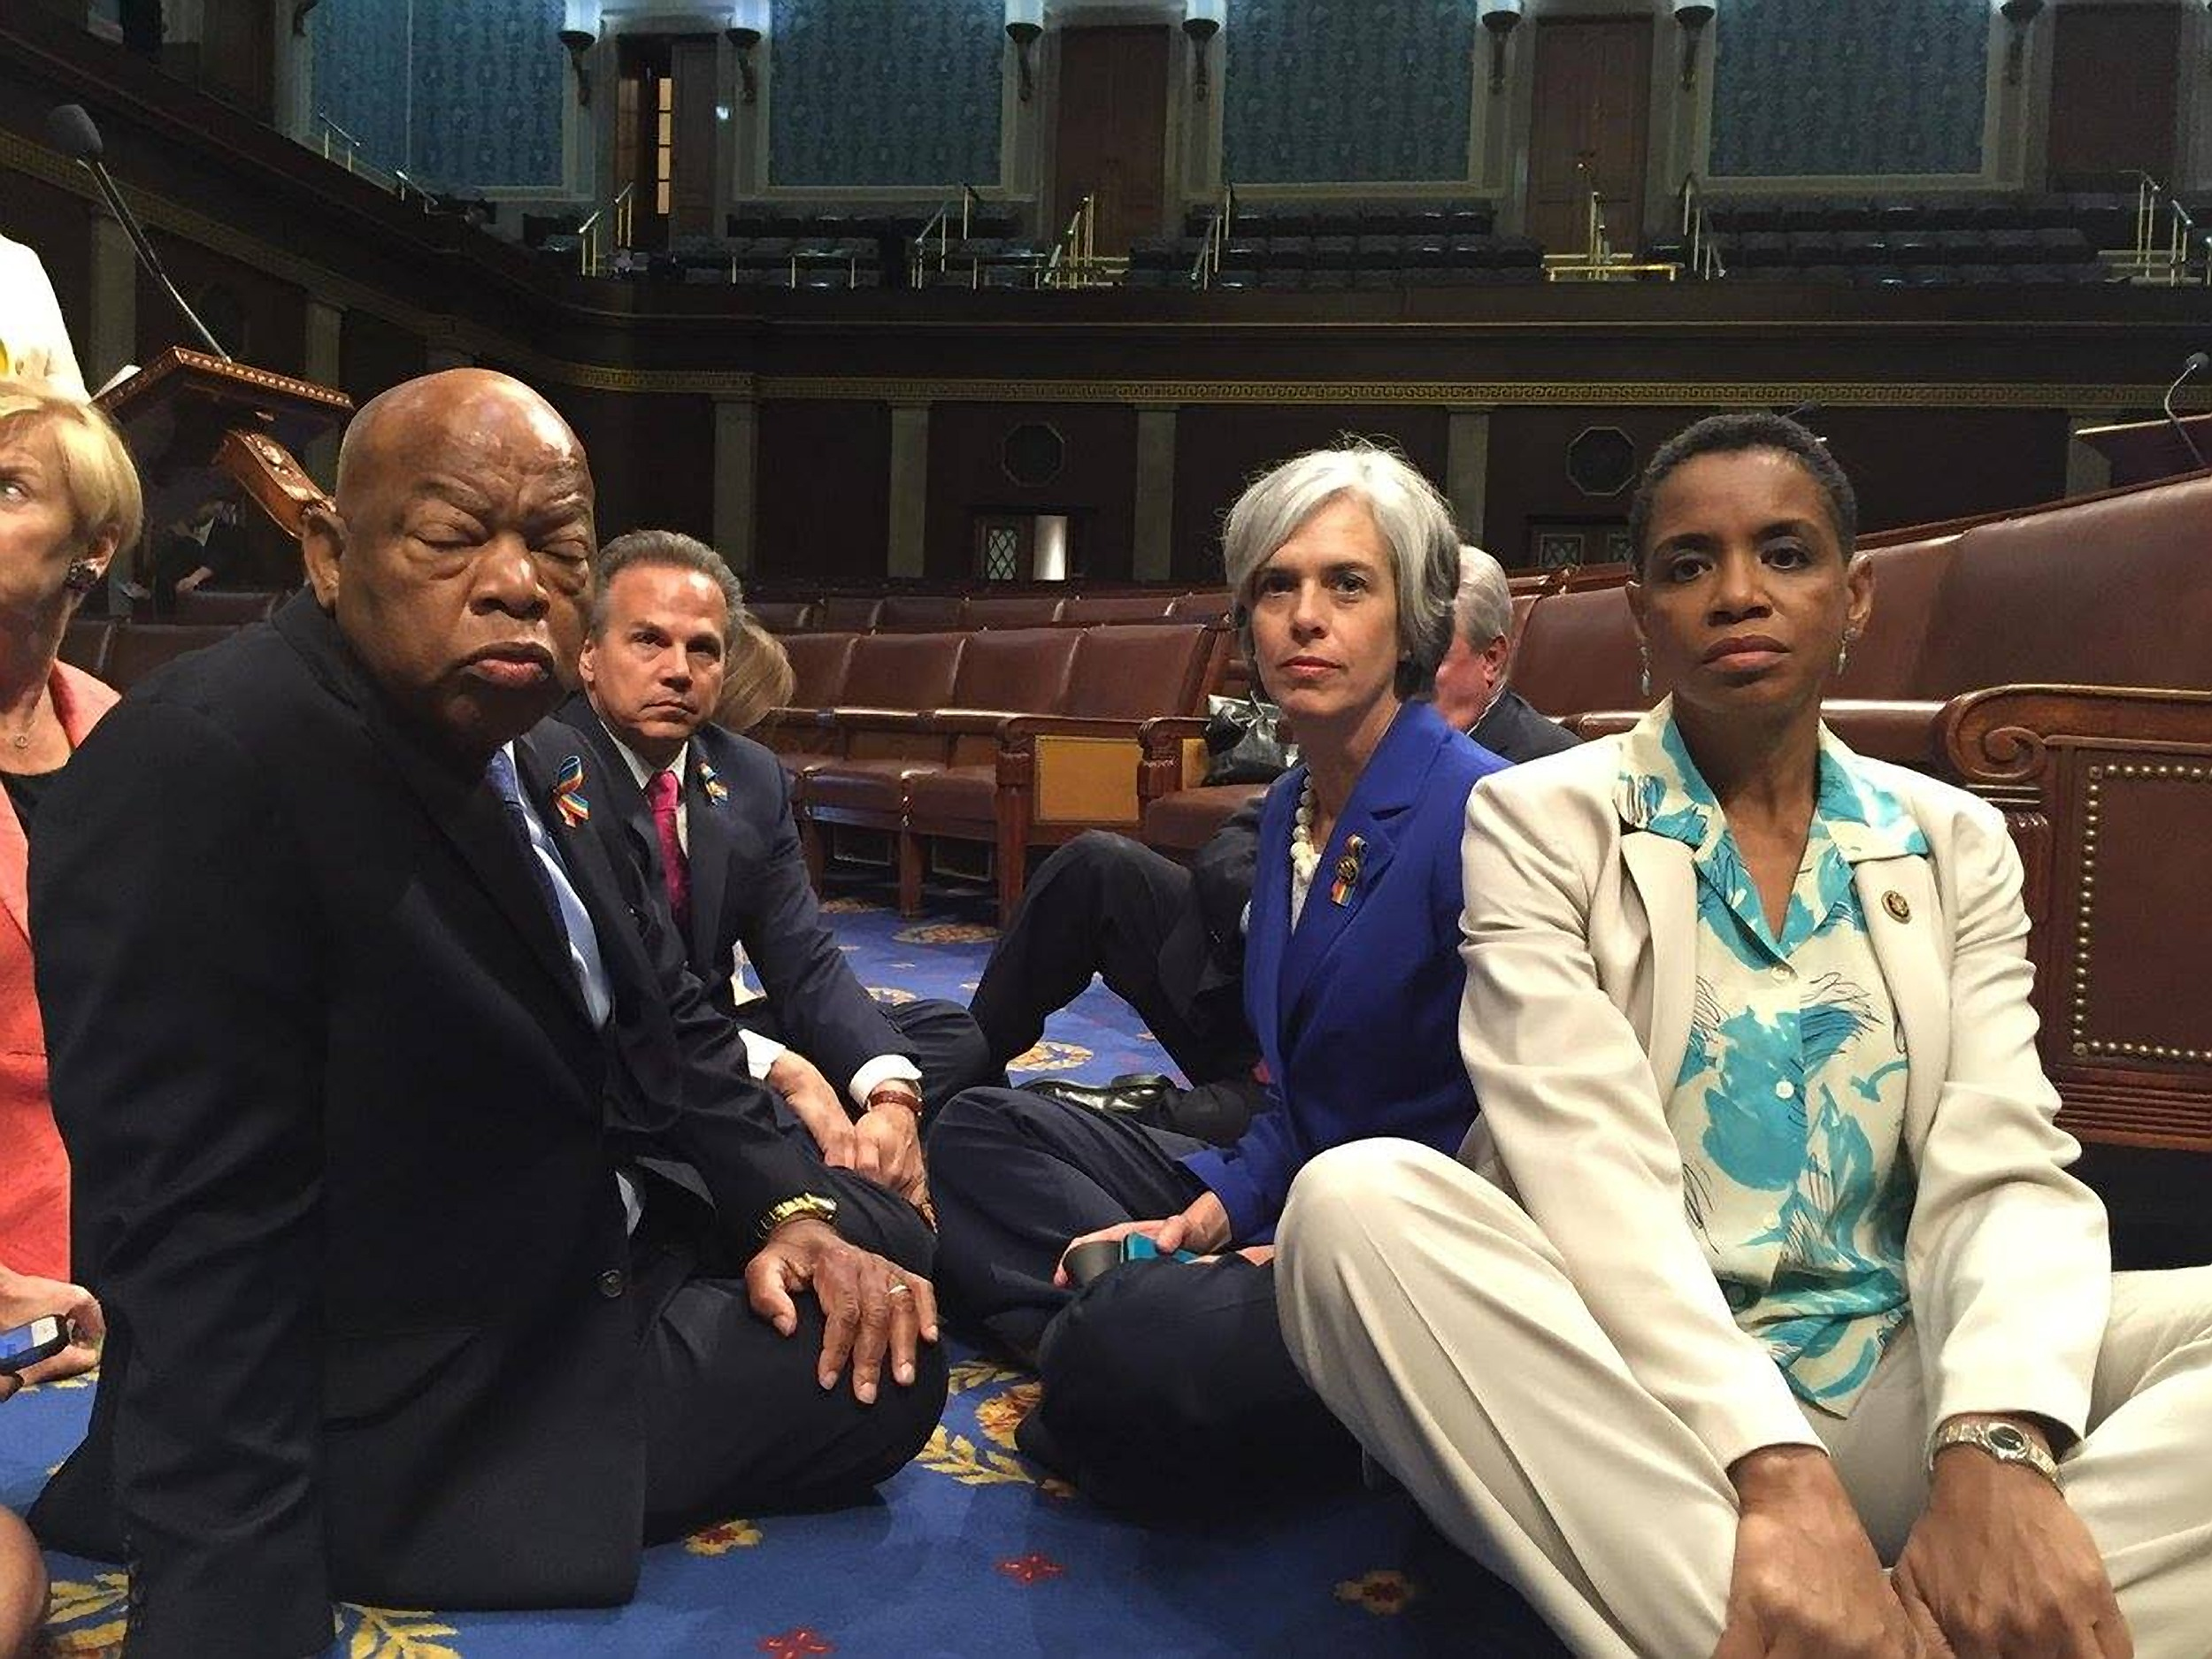 Democrats held up the House floor, June 22, demanding a vote on "no fly, no buy" gun control measures. (Photo: Donna Edwards/ZUMA Press/Newscom)